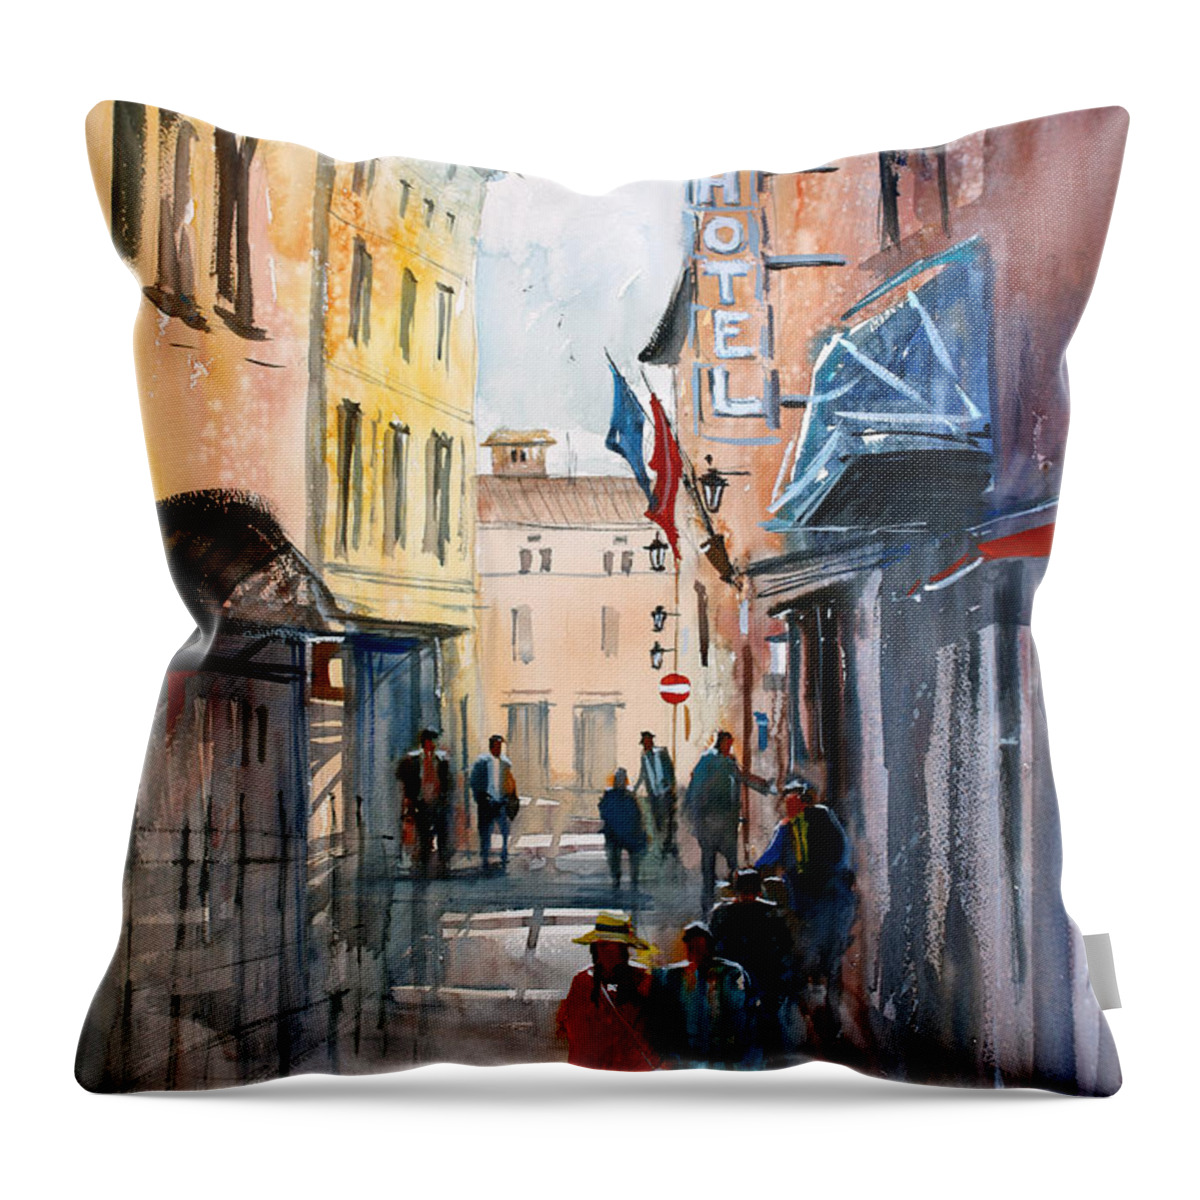 Ryan Radke Throw Pillow featuring the painting Italian Impressions 3 by Ryan Radke